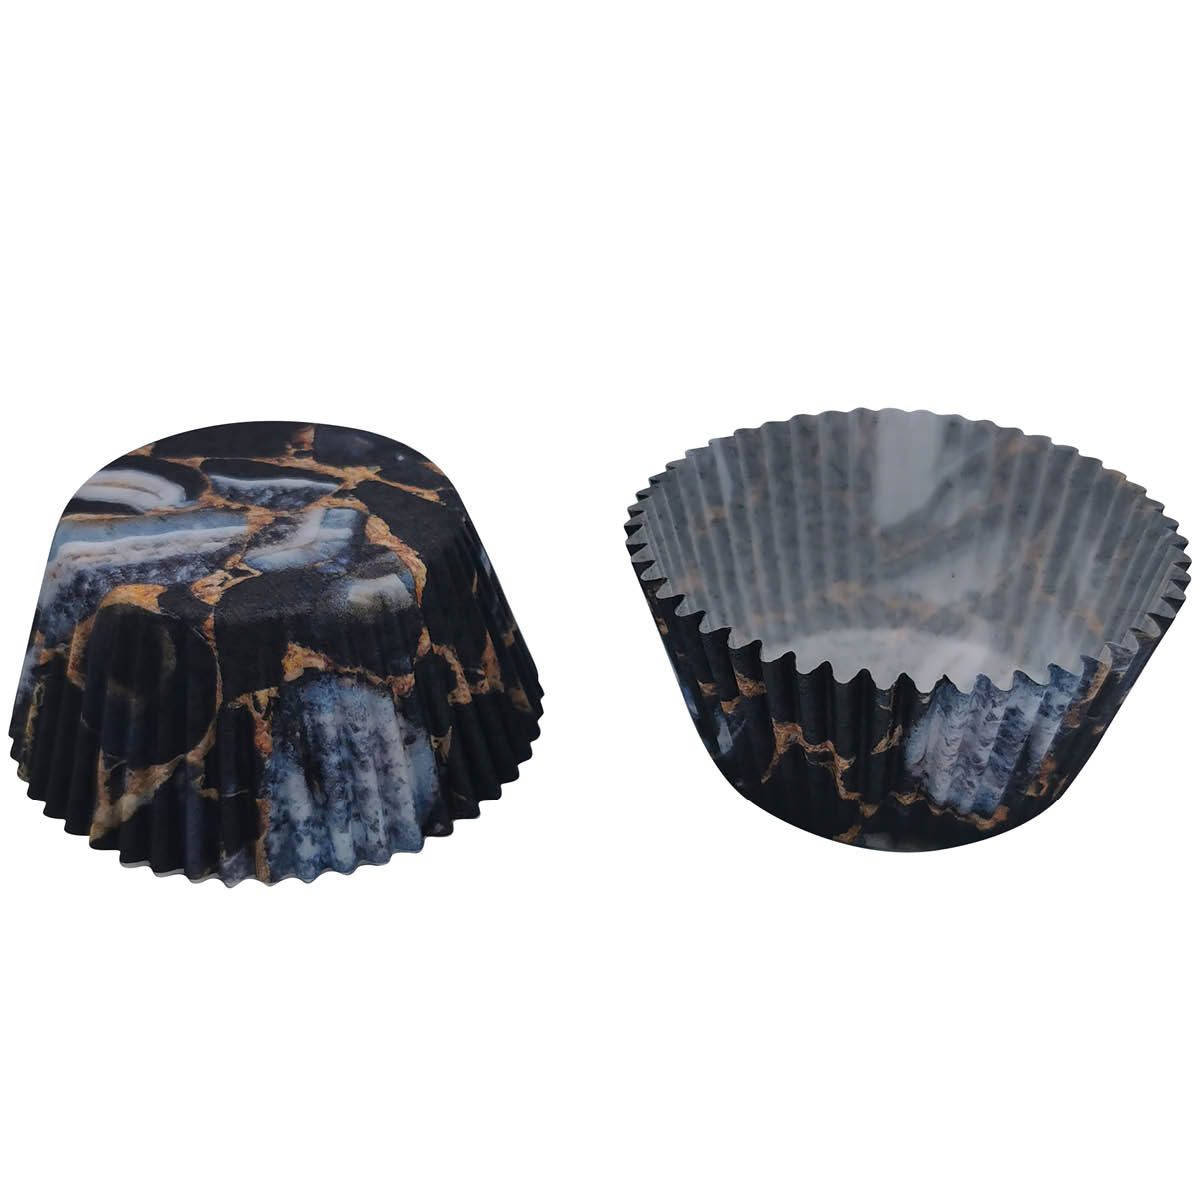 Modern House - bAYk Muffinsform 7x5x3,5 cm 50-pack Svart/Guld